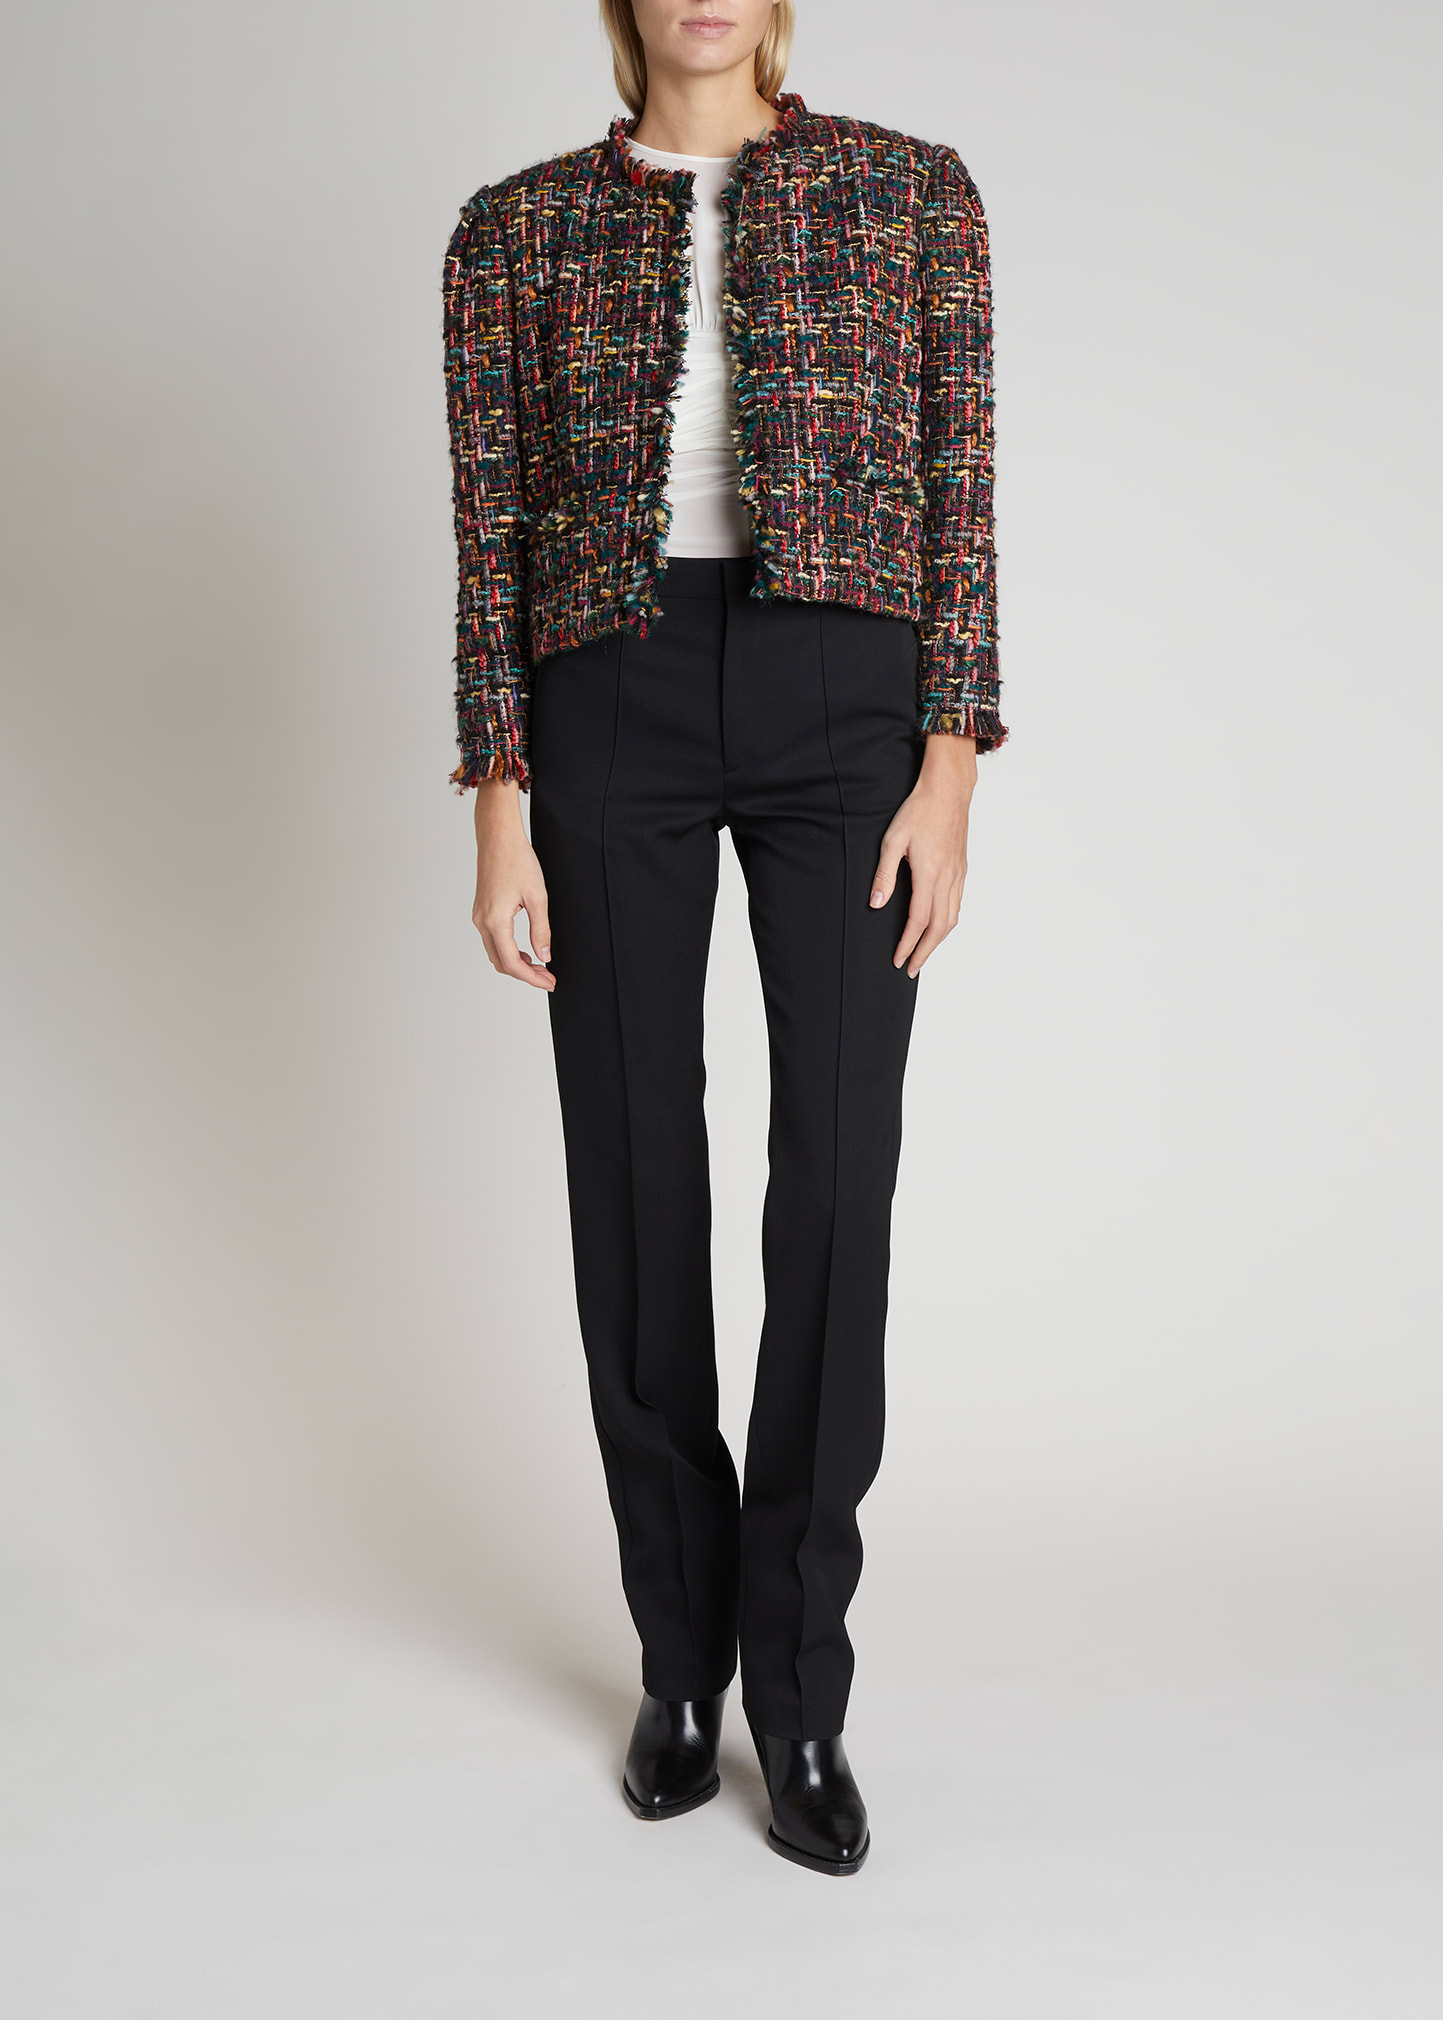 Isabel Marant Zingya Bouclé Tweed Jacket In Multi